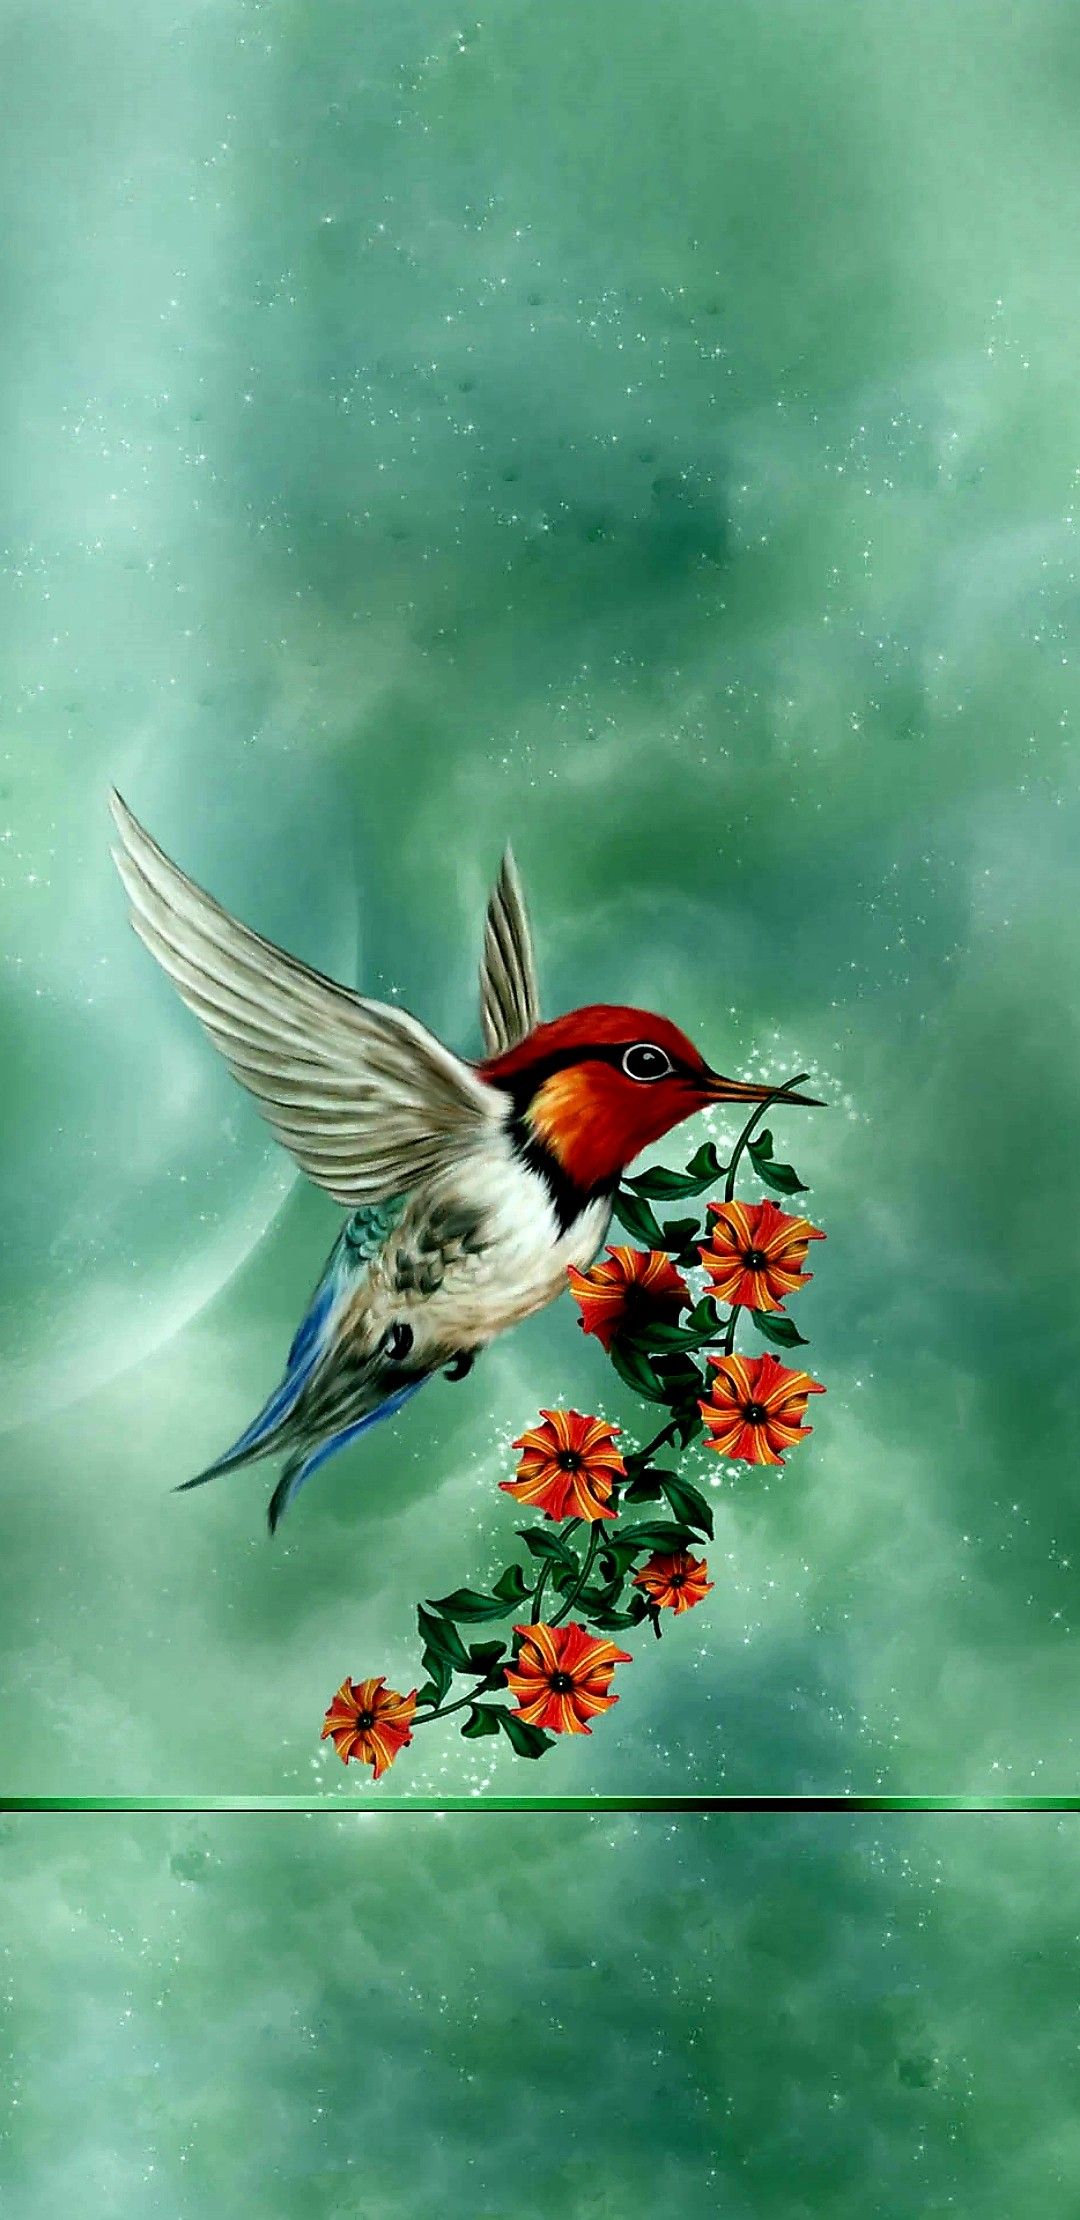 All Birds Wallpaper ideas. birds, all birds, beautiful birds